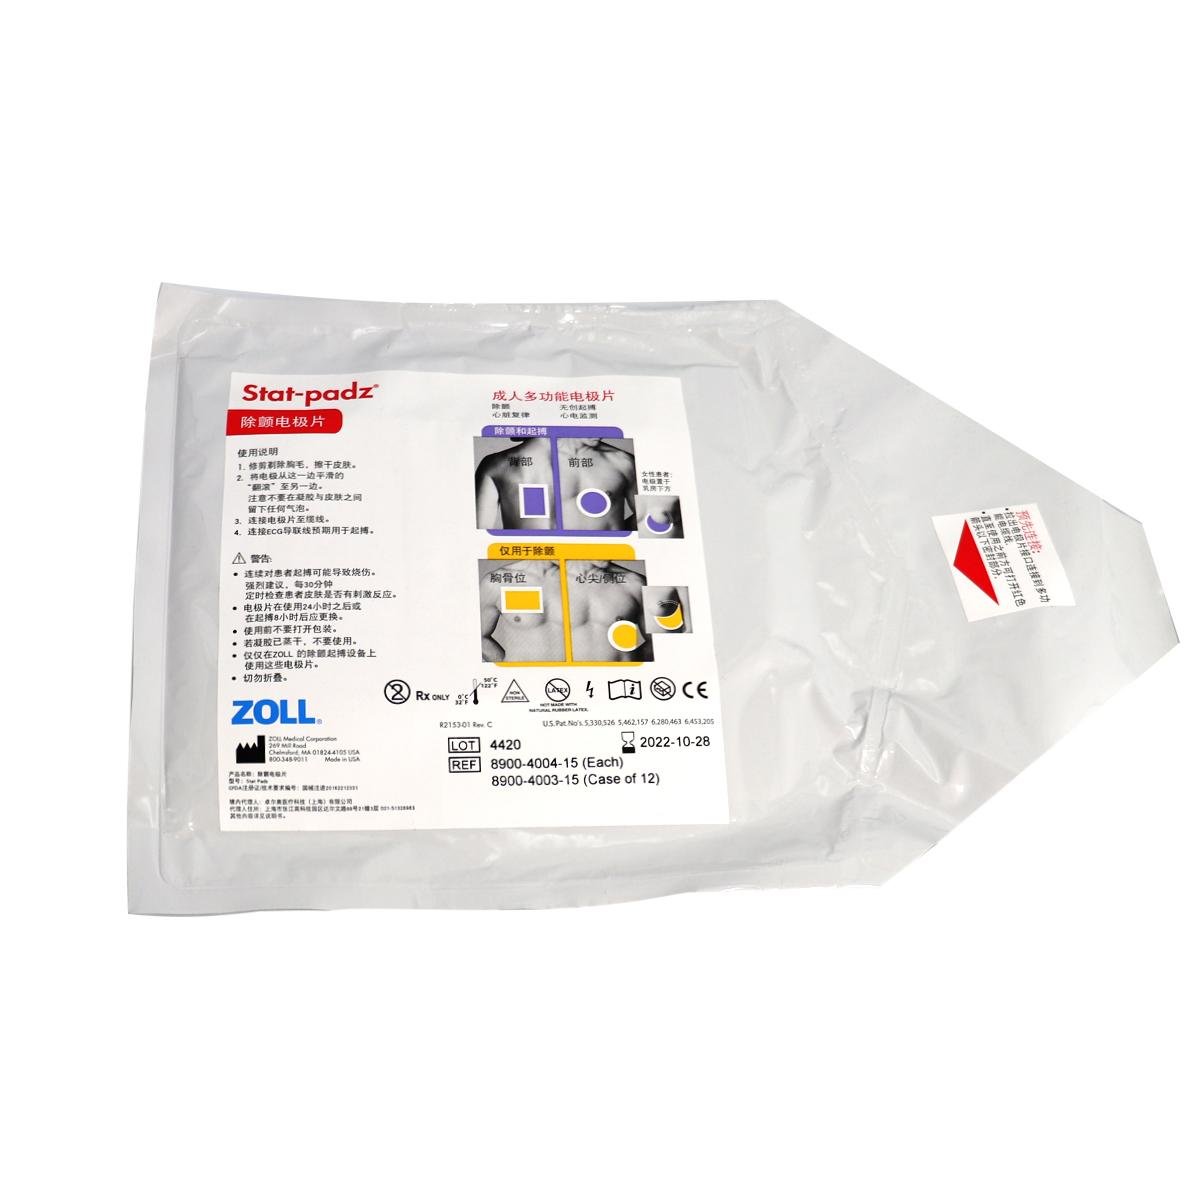 Zoll original defibrillation electrode AED 8900-4004-15